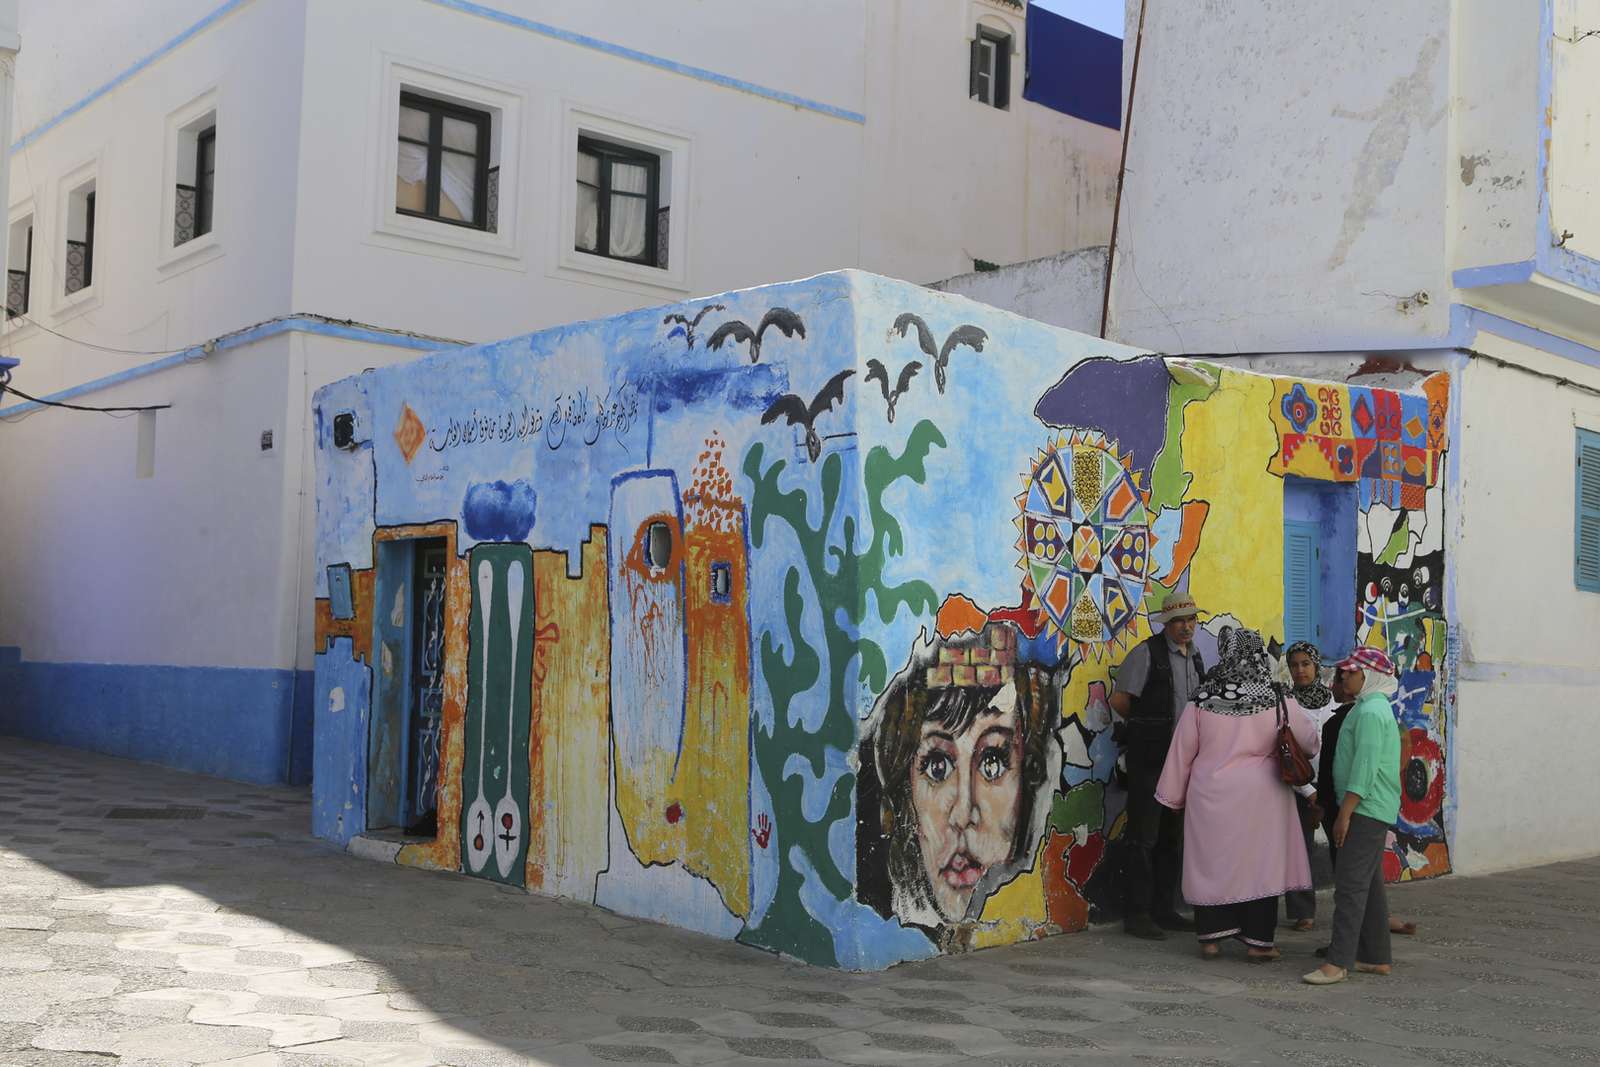 Asilah w Maroku w Afryce puzzle online